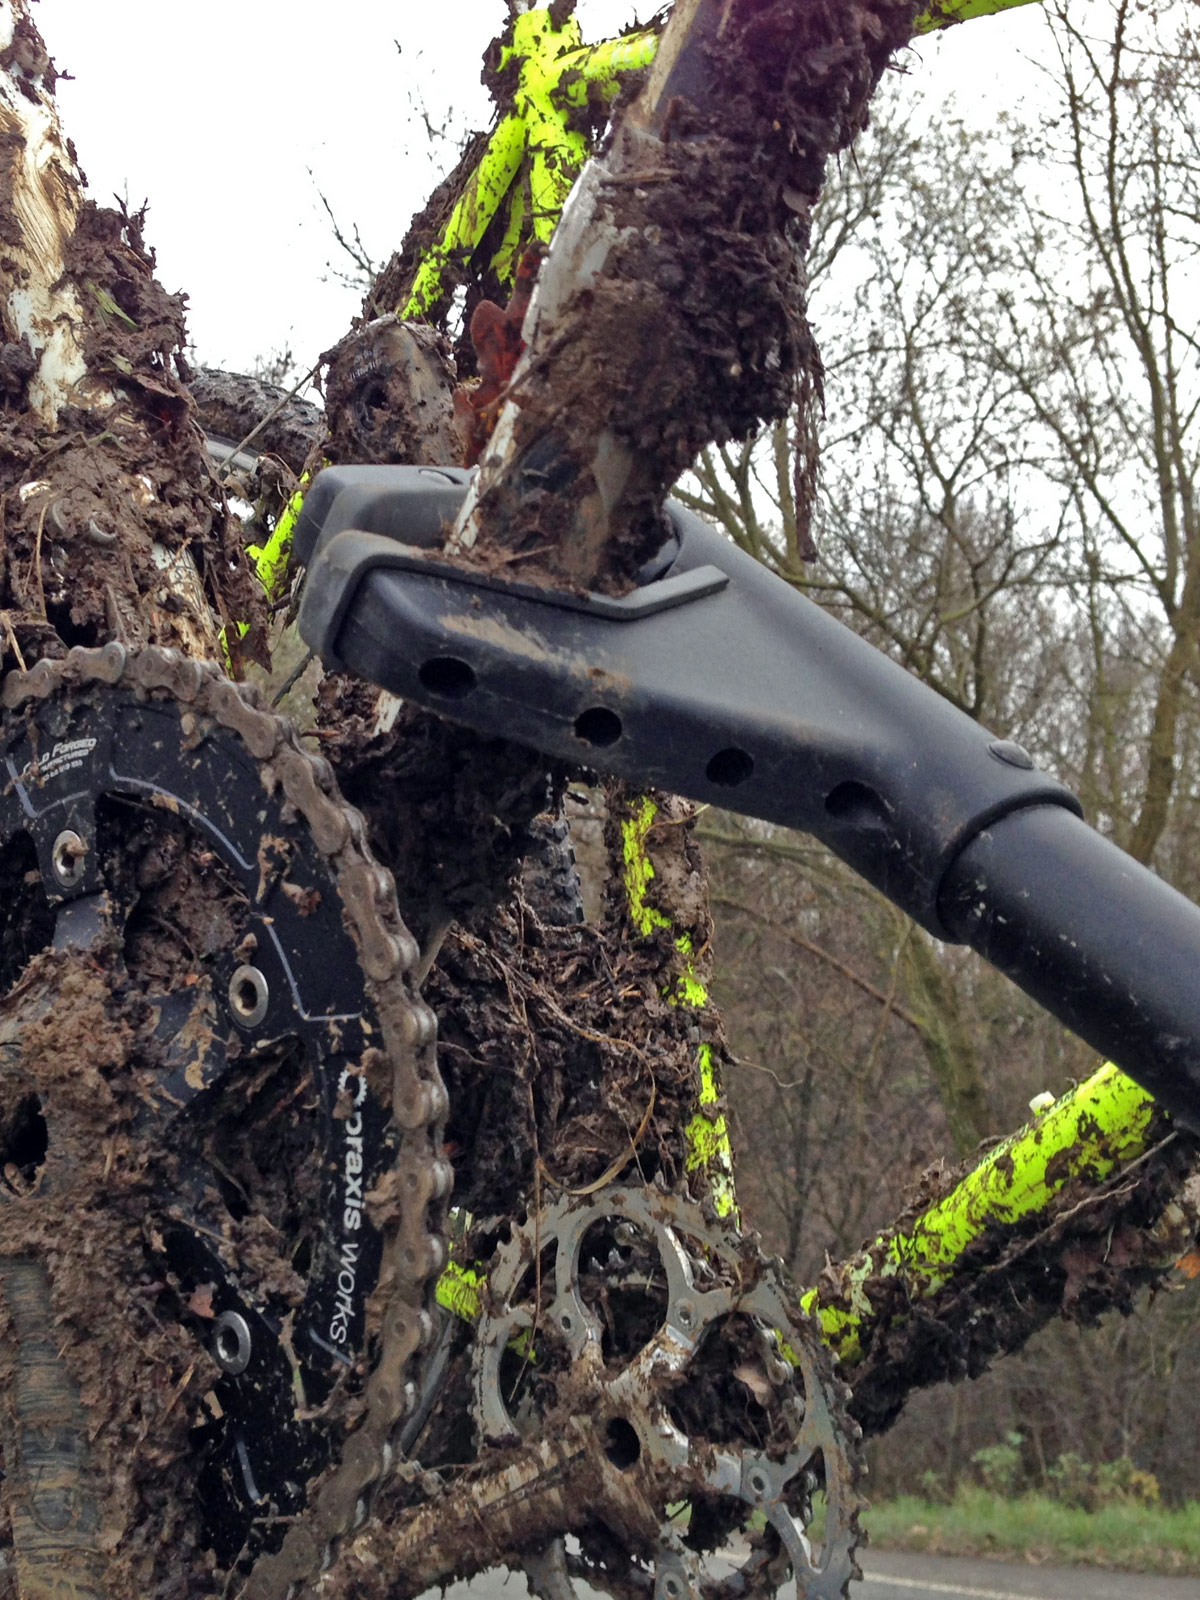 https://bikerumor.com/wp-content/uploads/2015/11/Thule_ProRide-591_roof-mount_upright-bike-carrier_muddy-cx-downtube.jpg